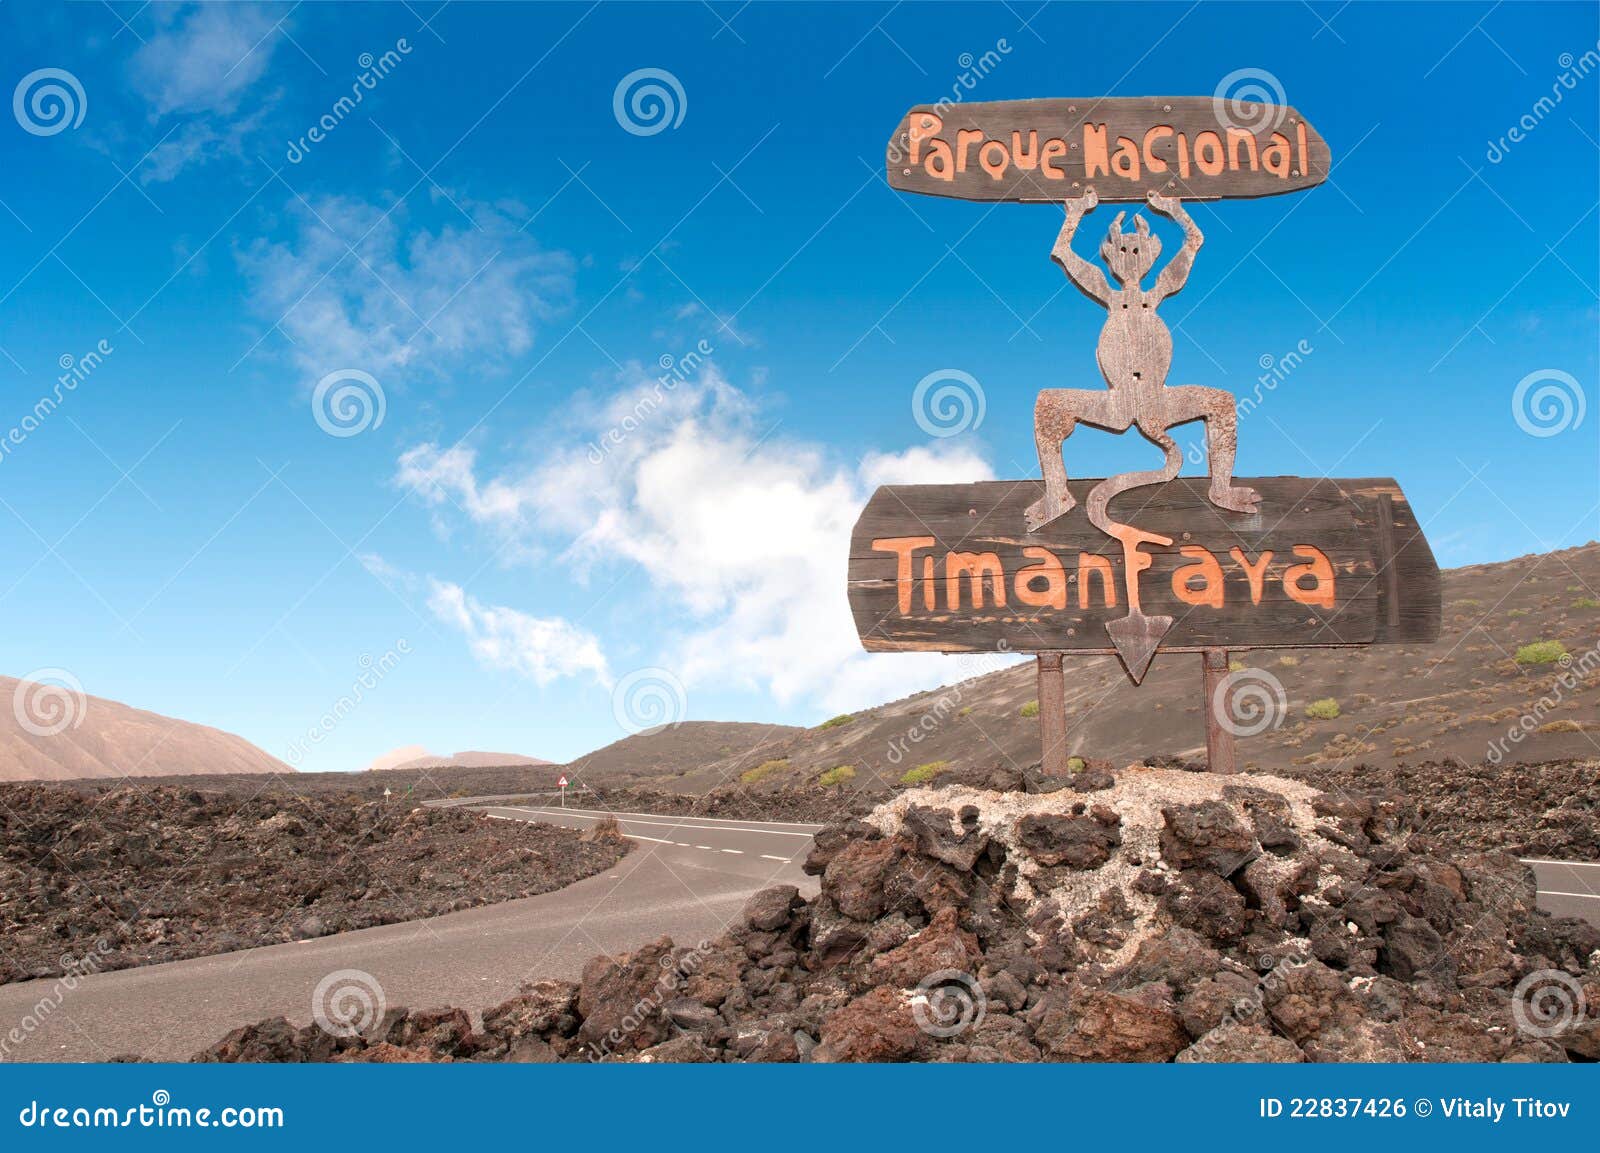 timanfaya national park, canary, spain